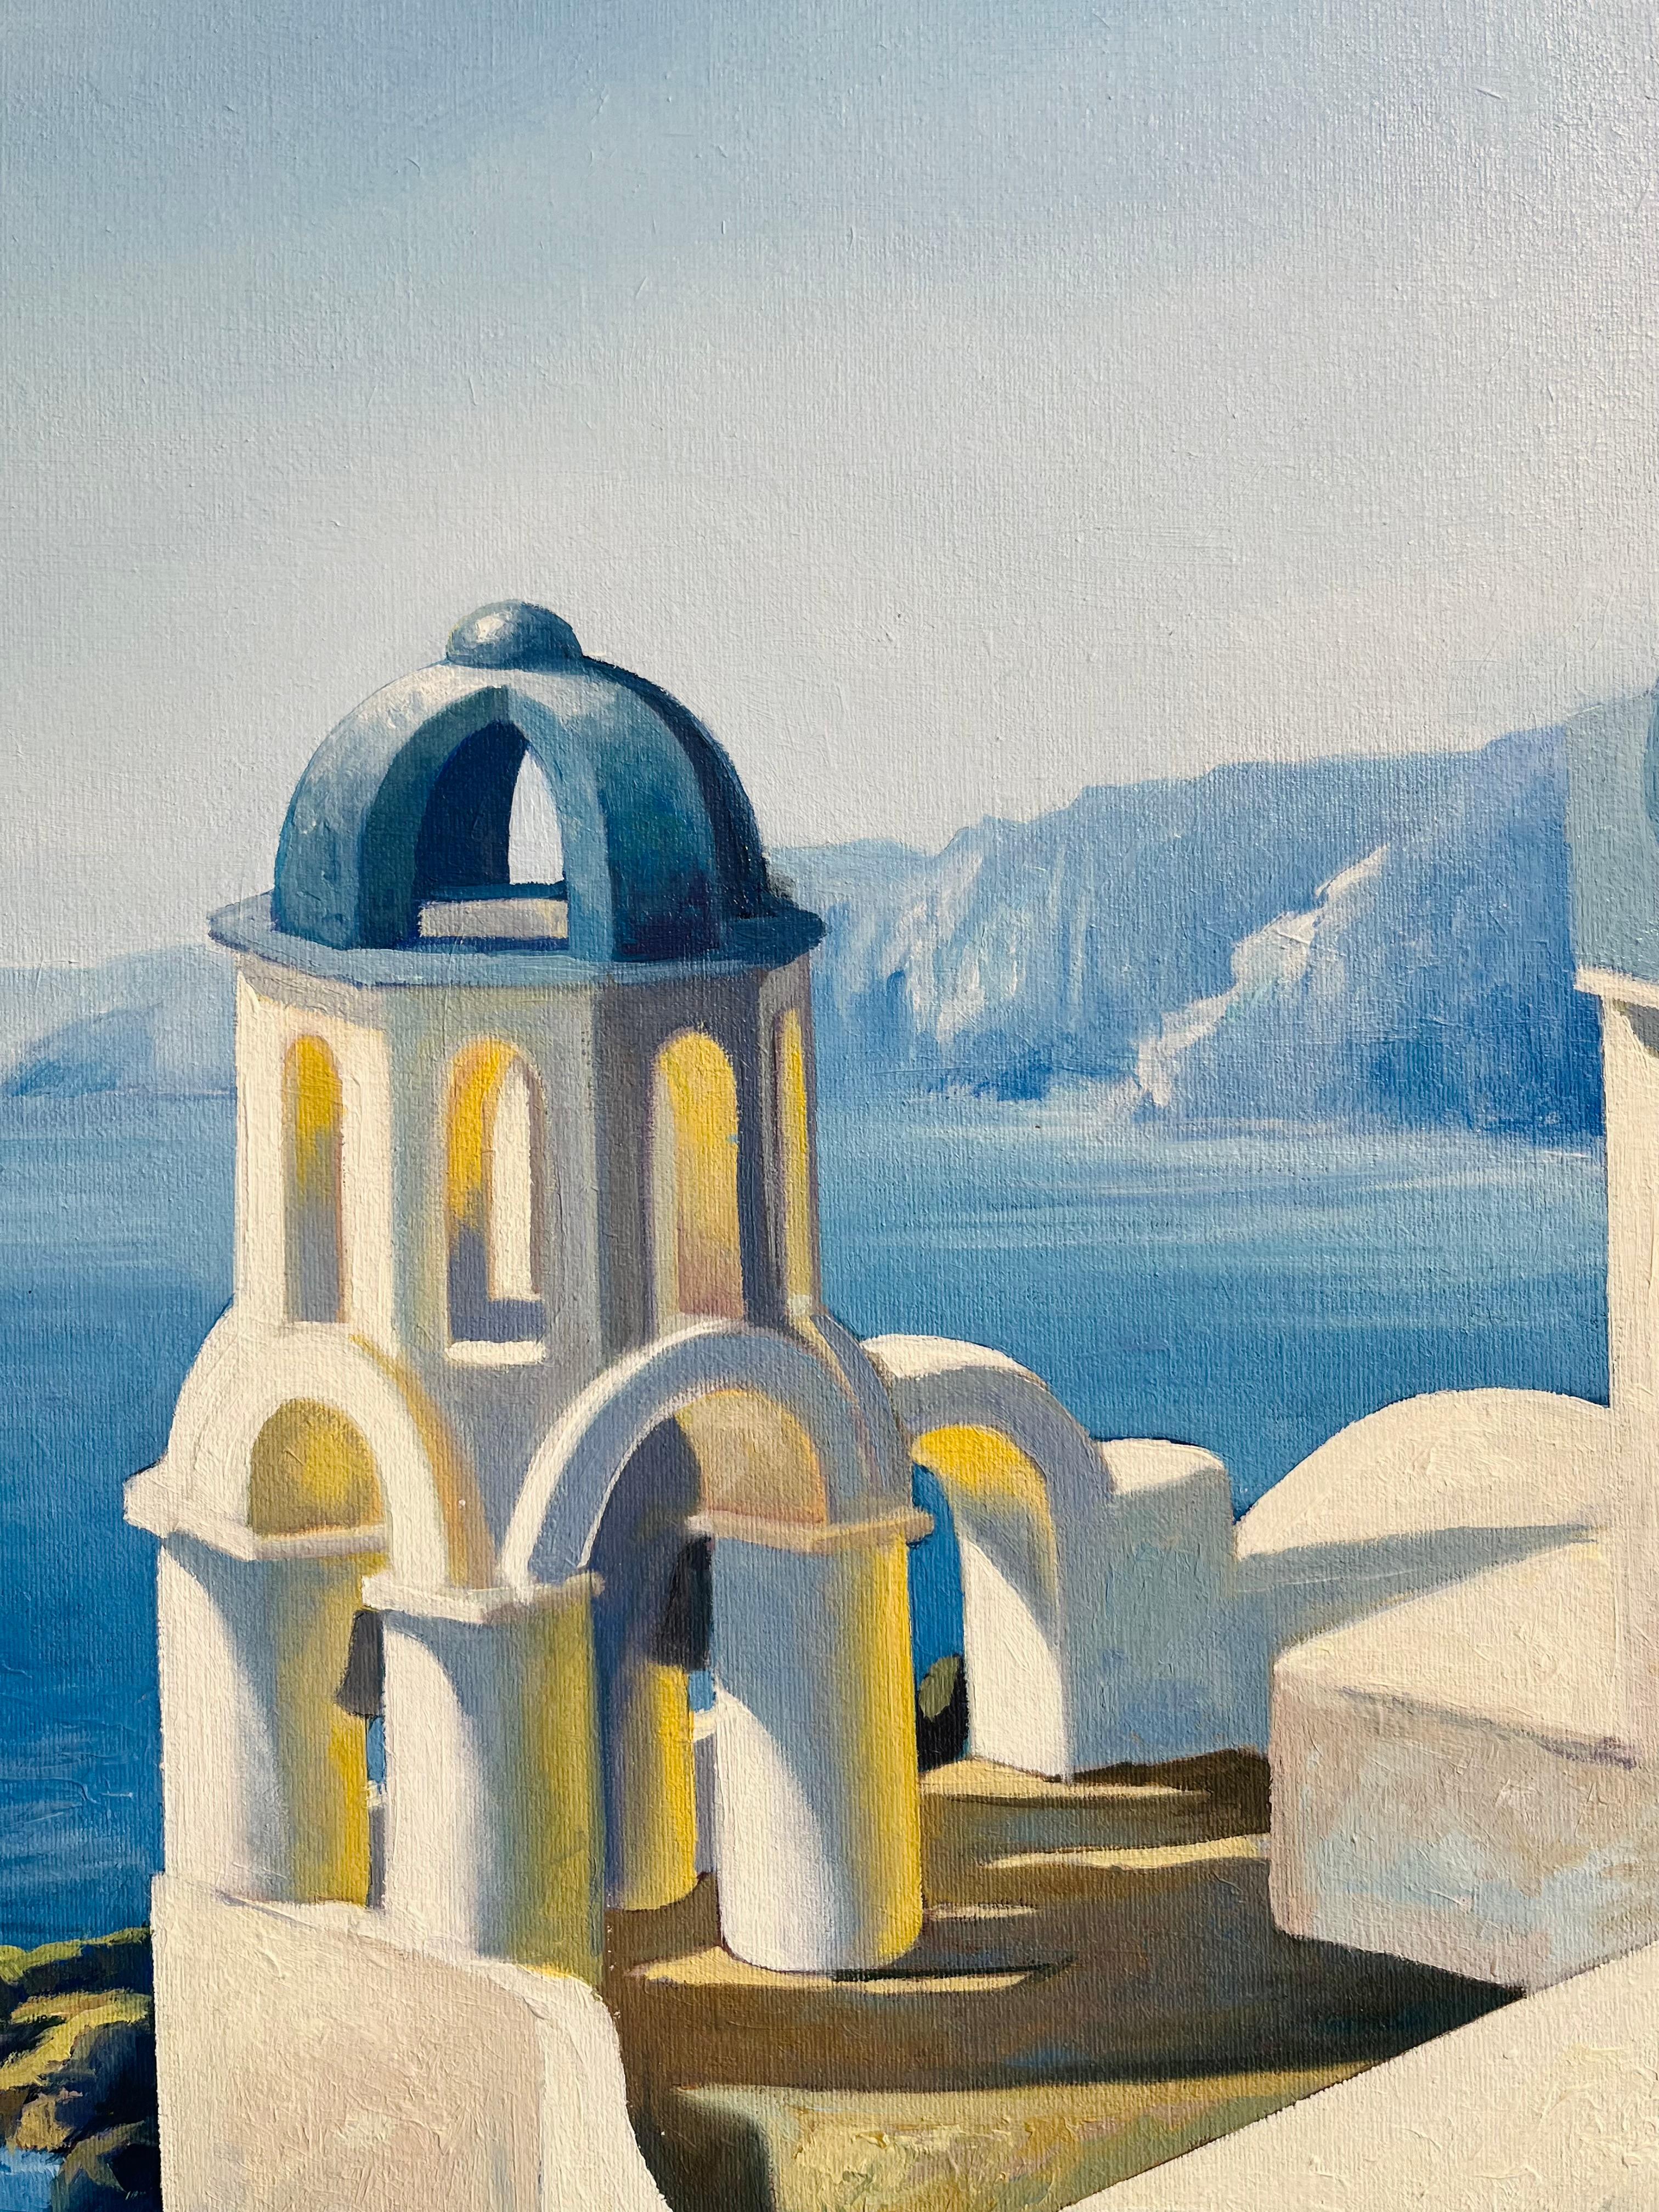 Mediterranean View-original realism surreal still life-seascape oil Painting-Art 1